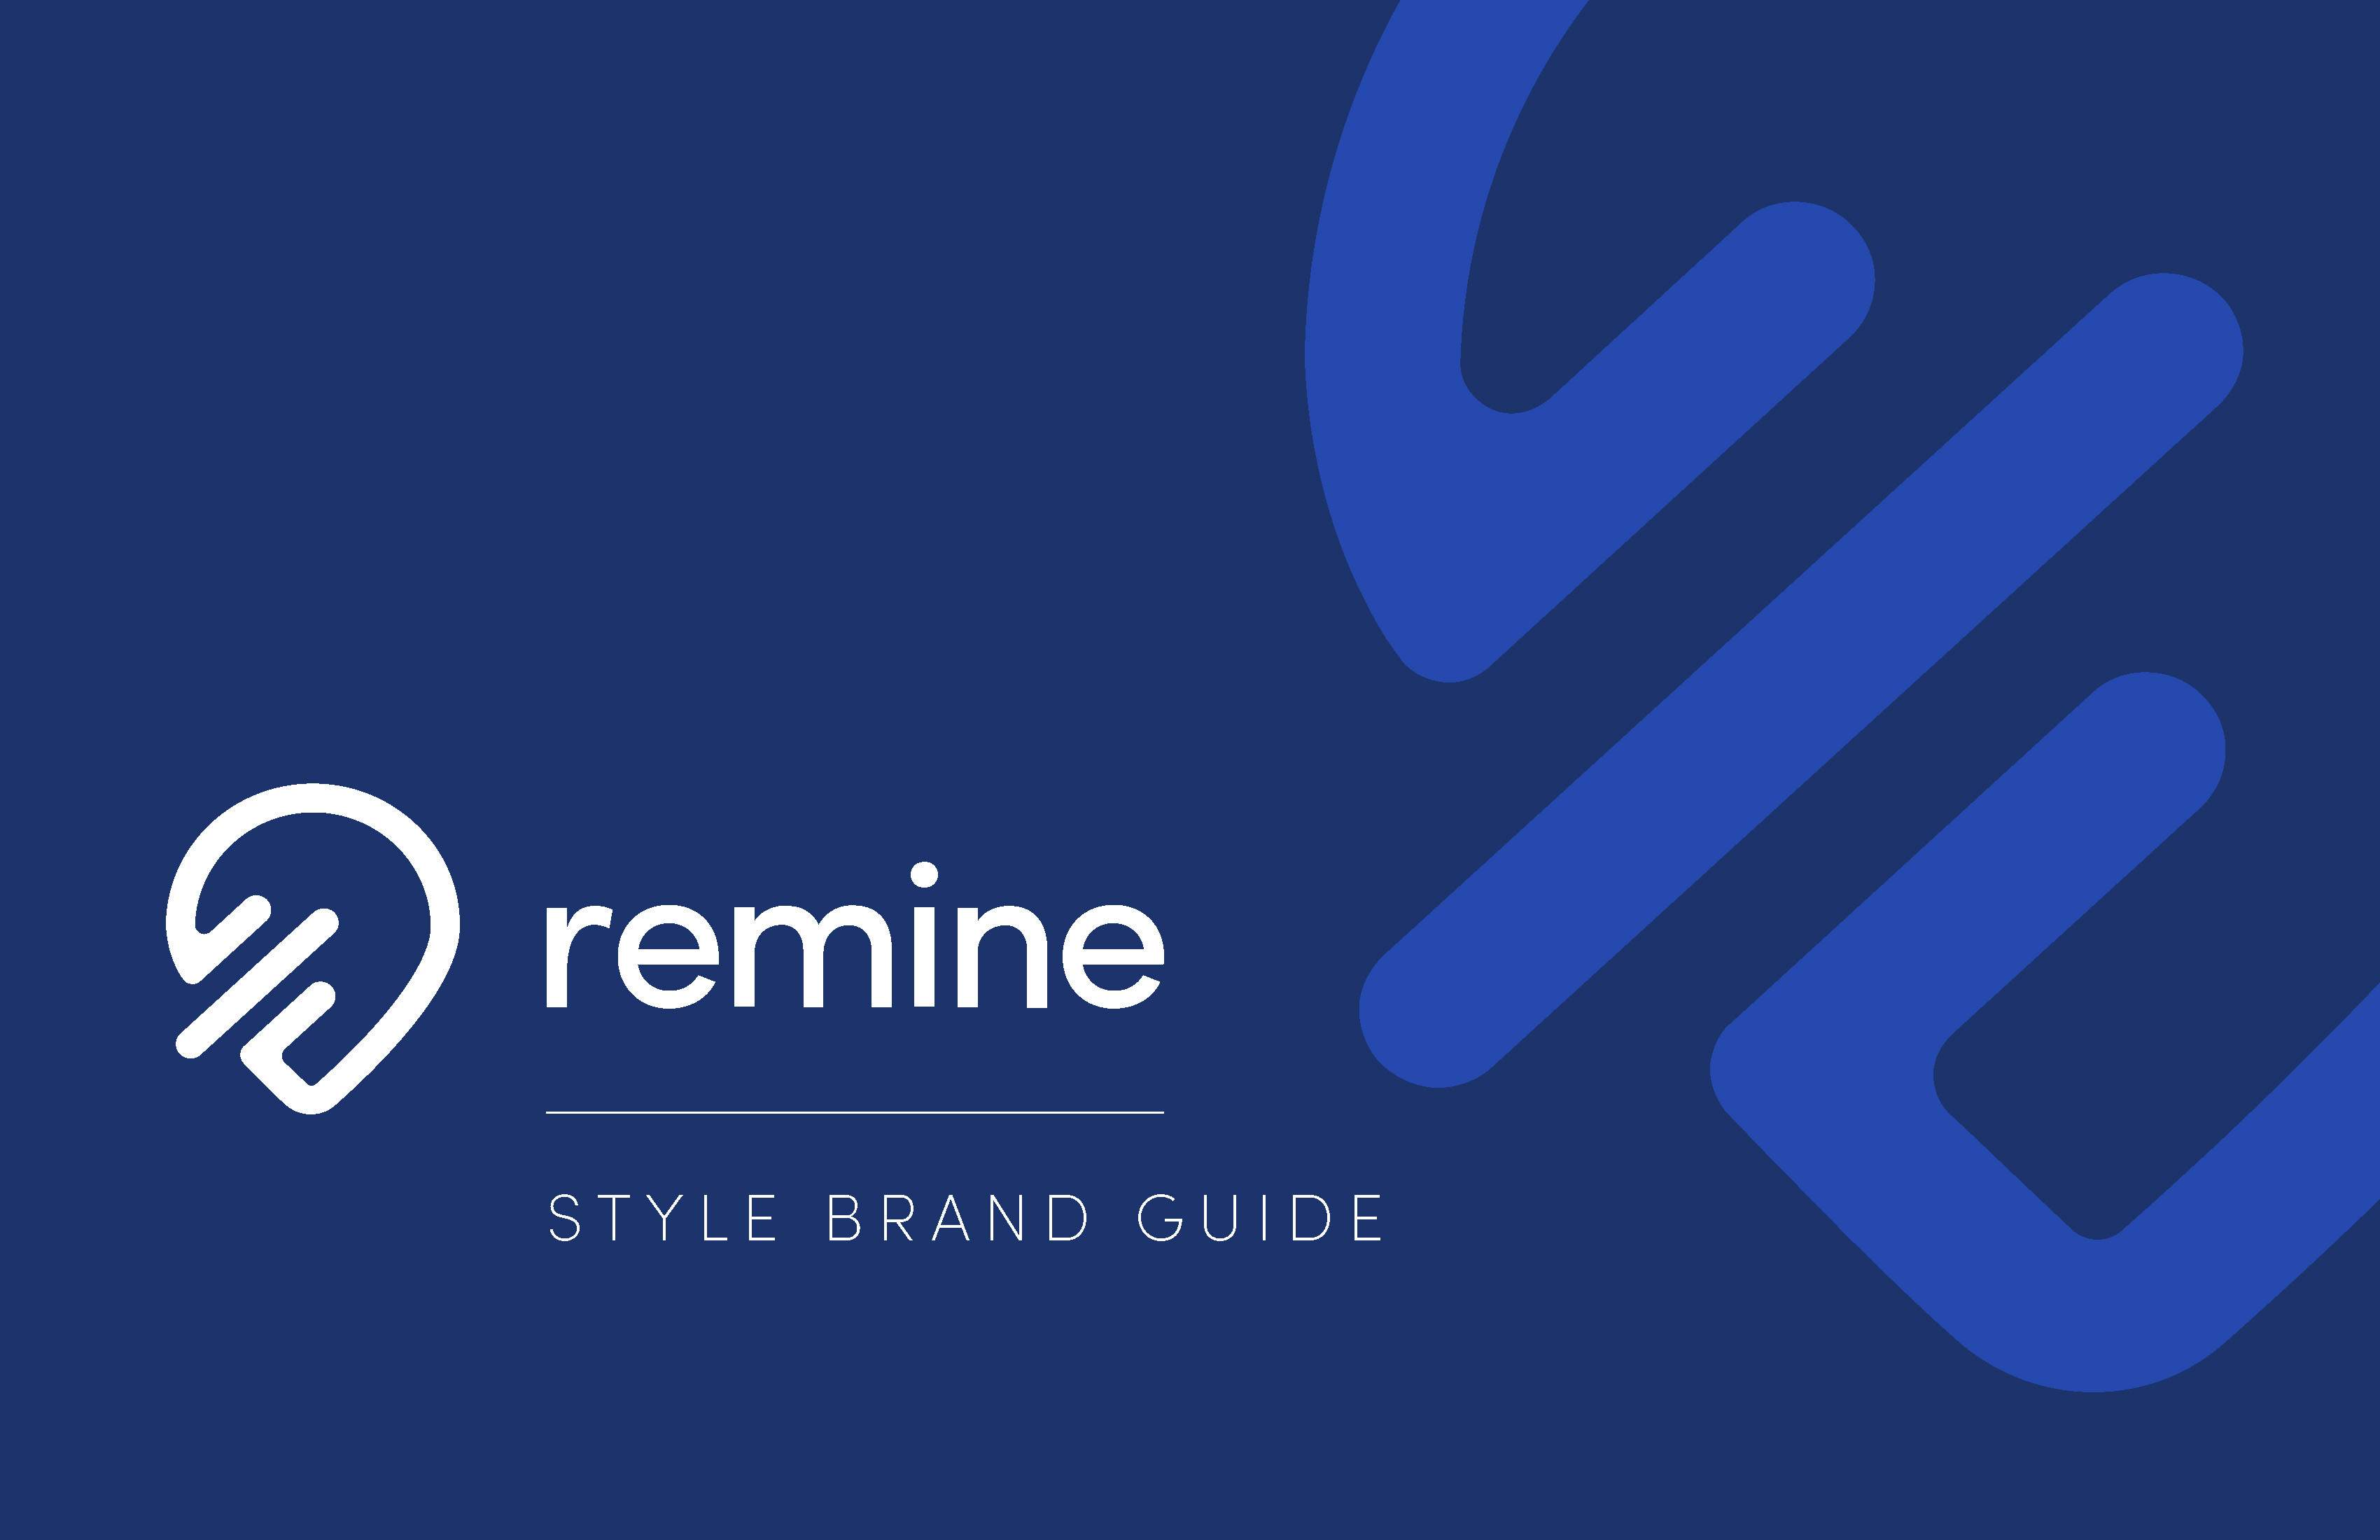 Remine Brand Guide Cover